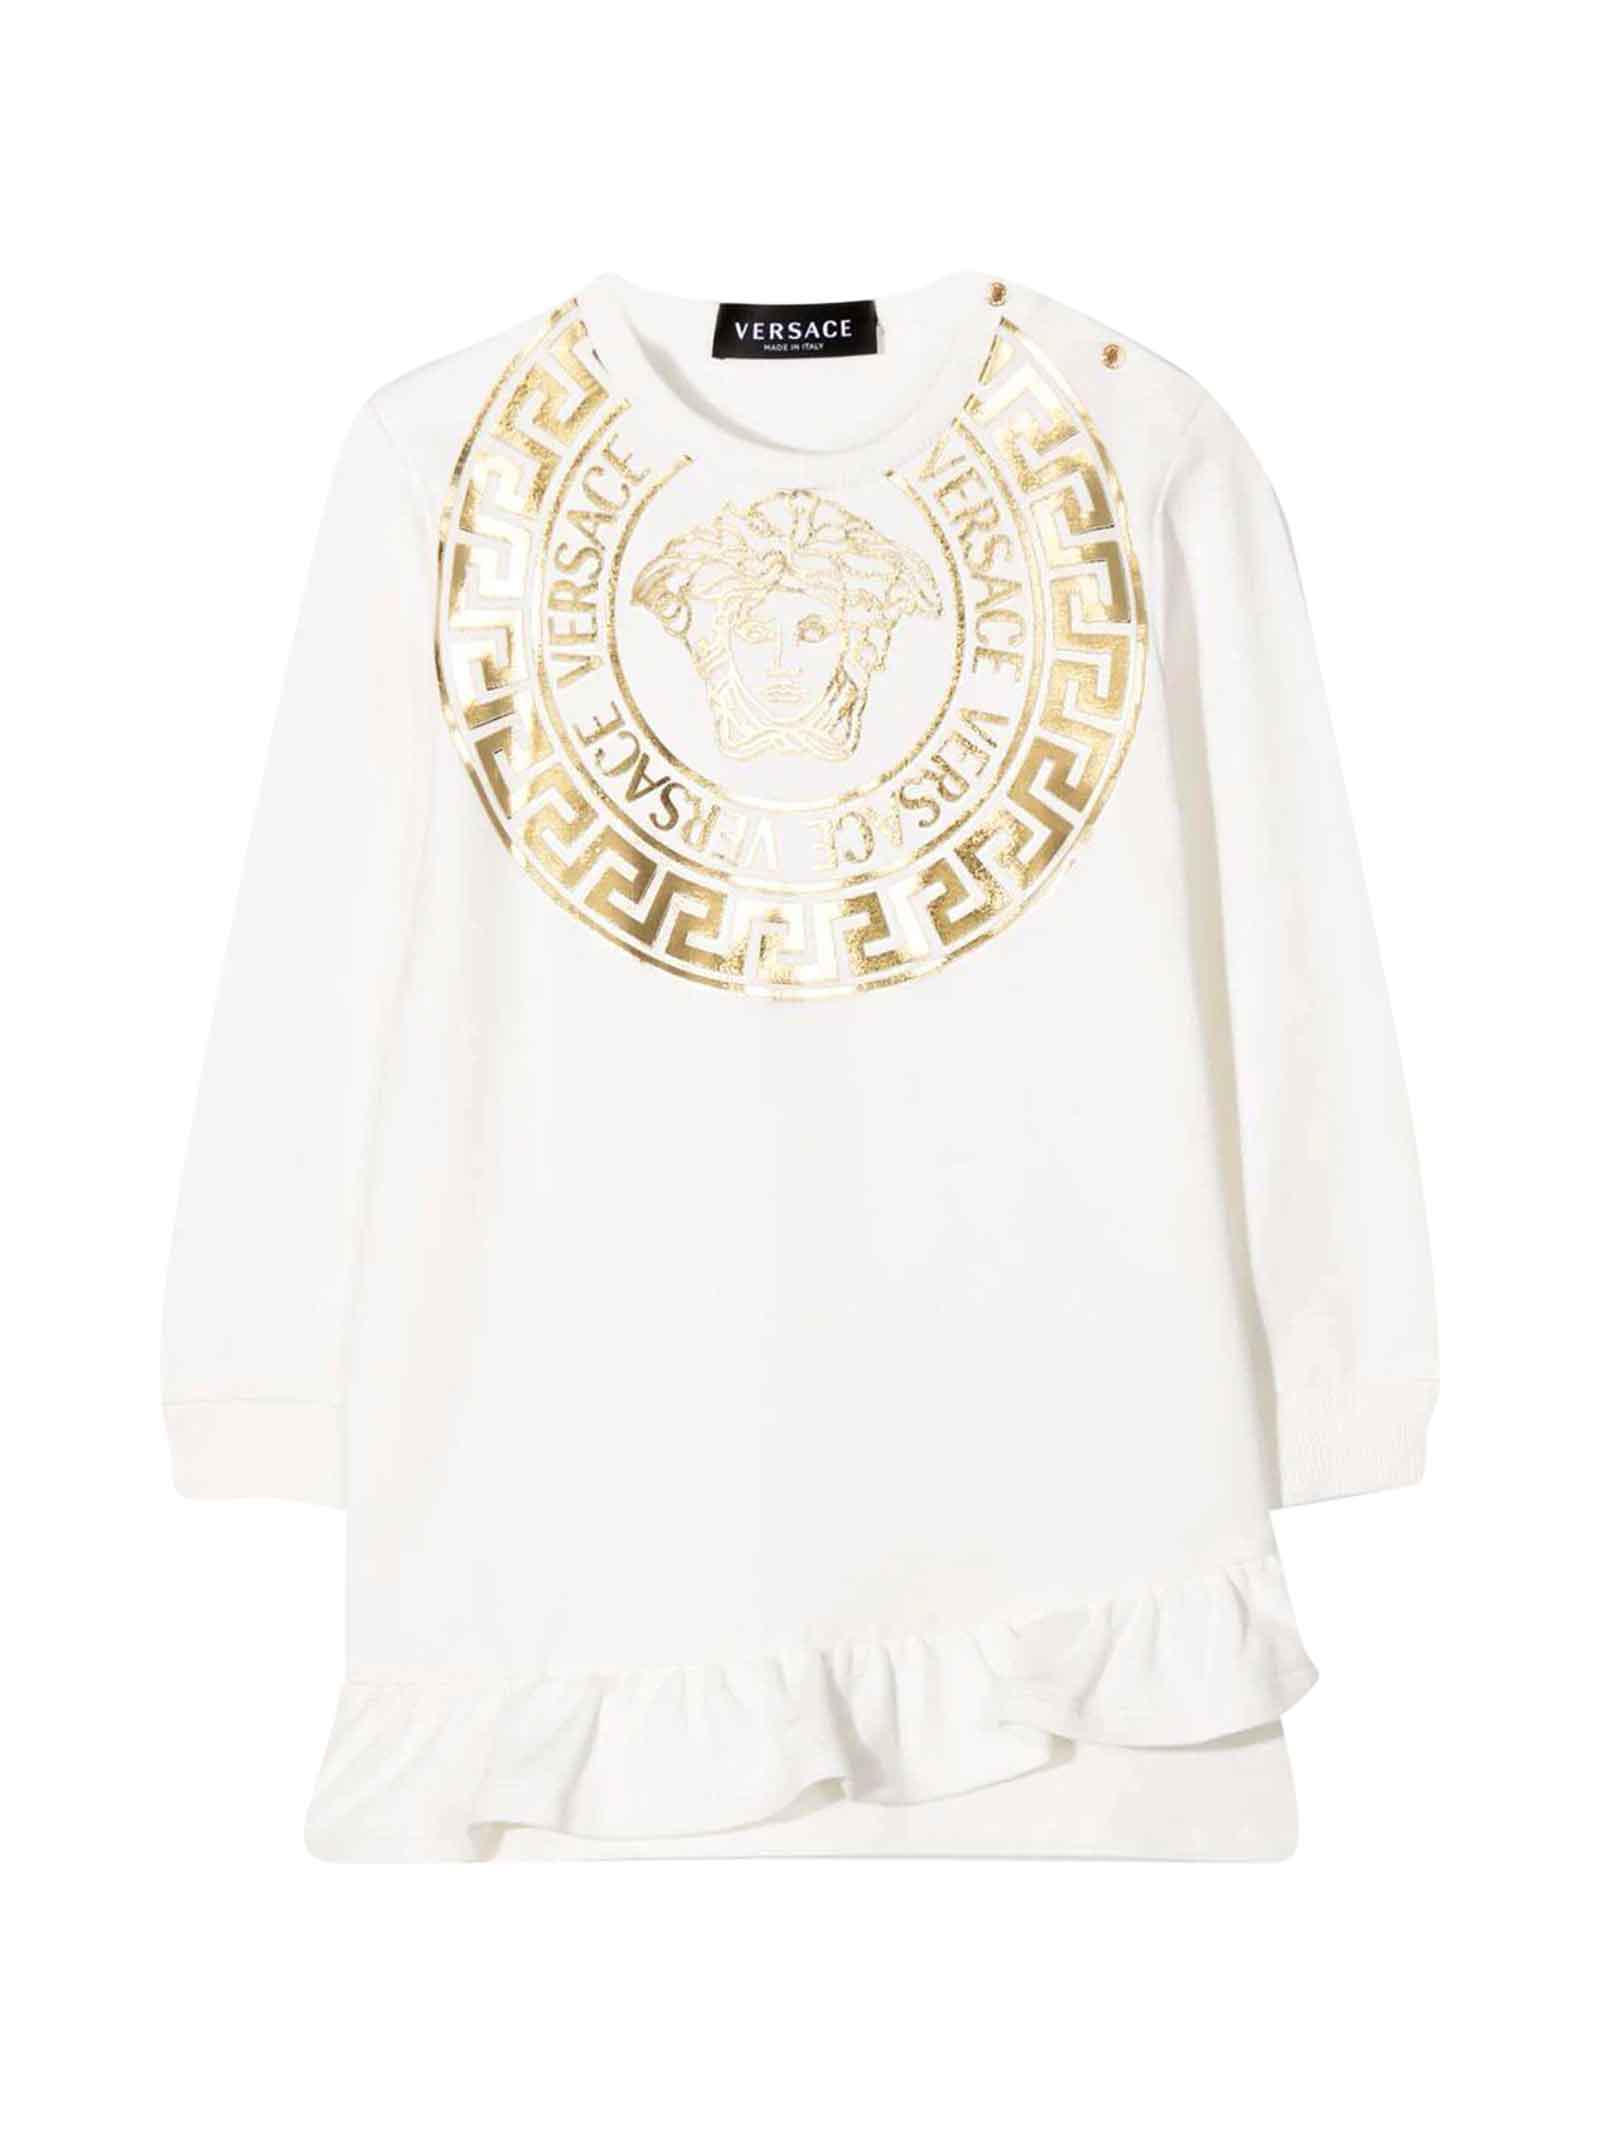 Versace White / Gold Dress Baby Kids